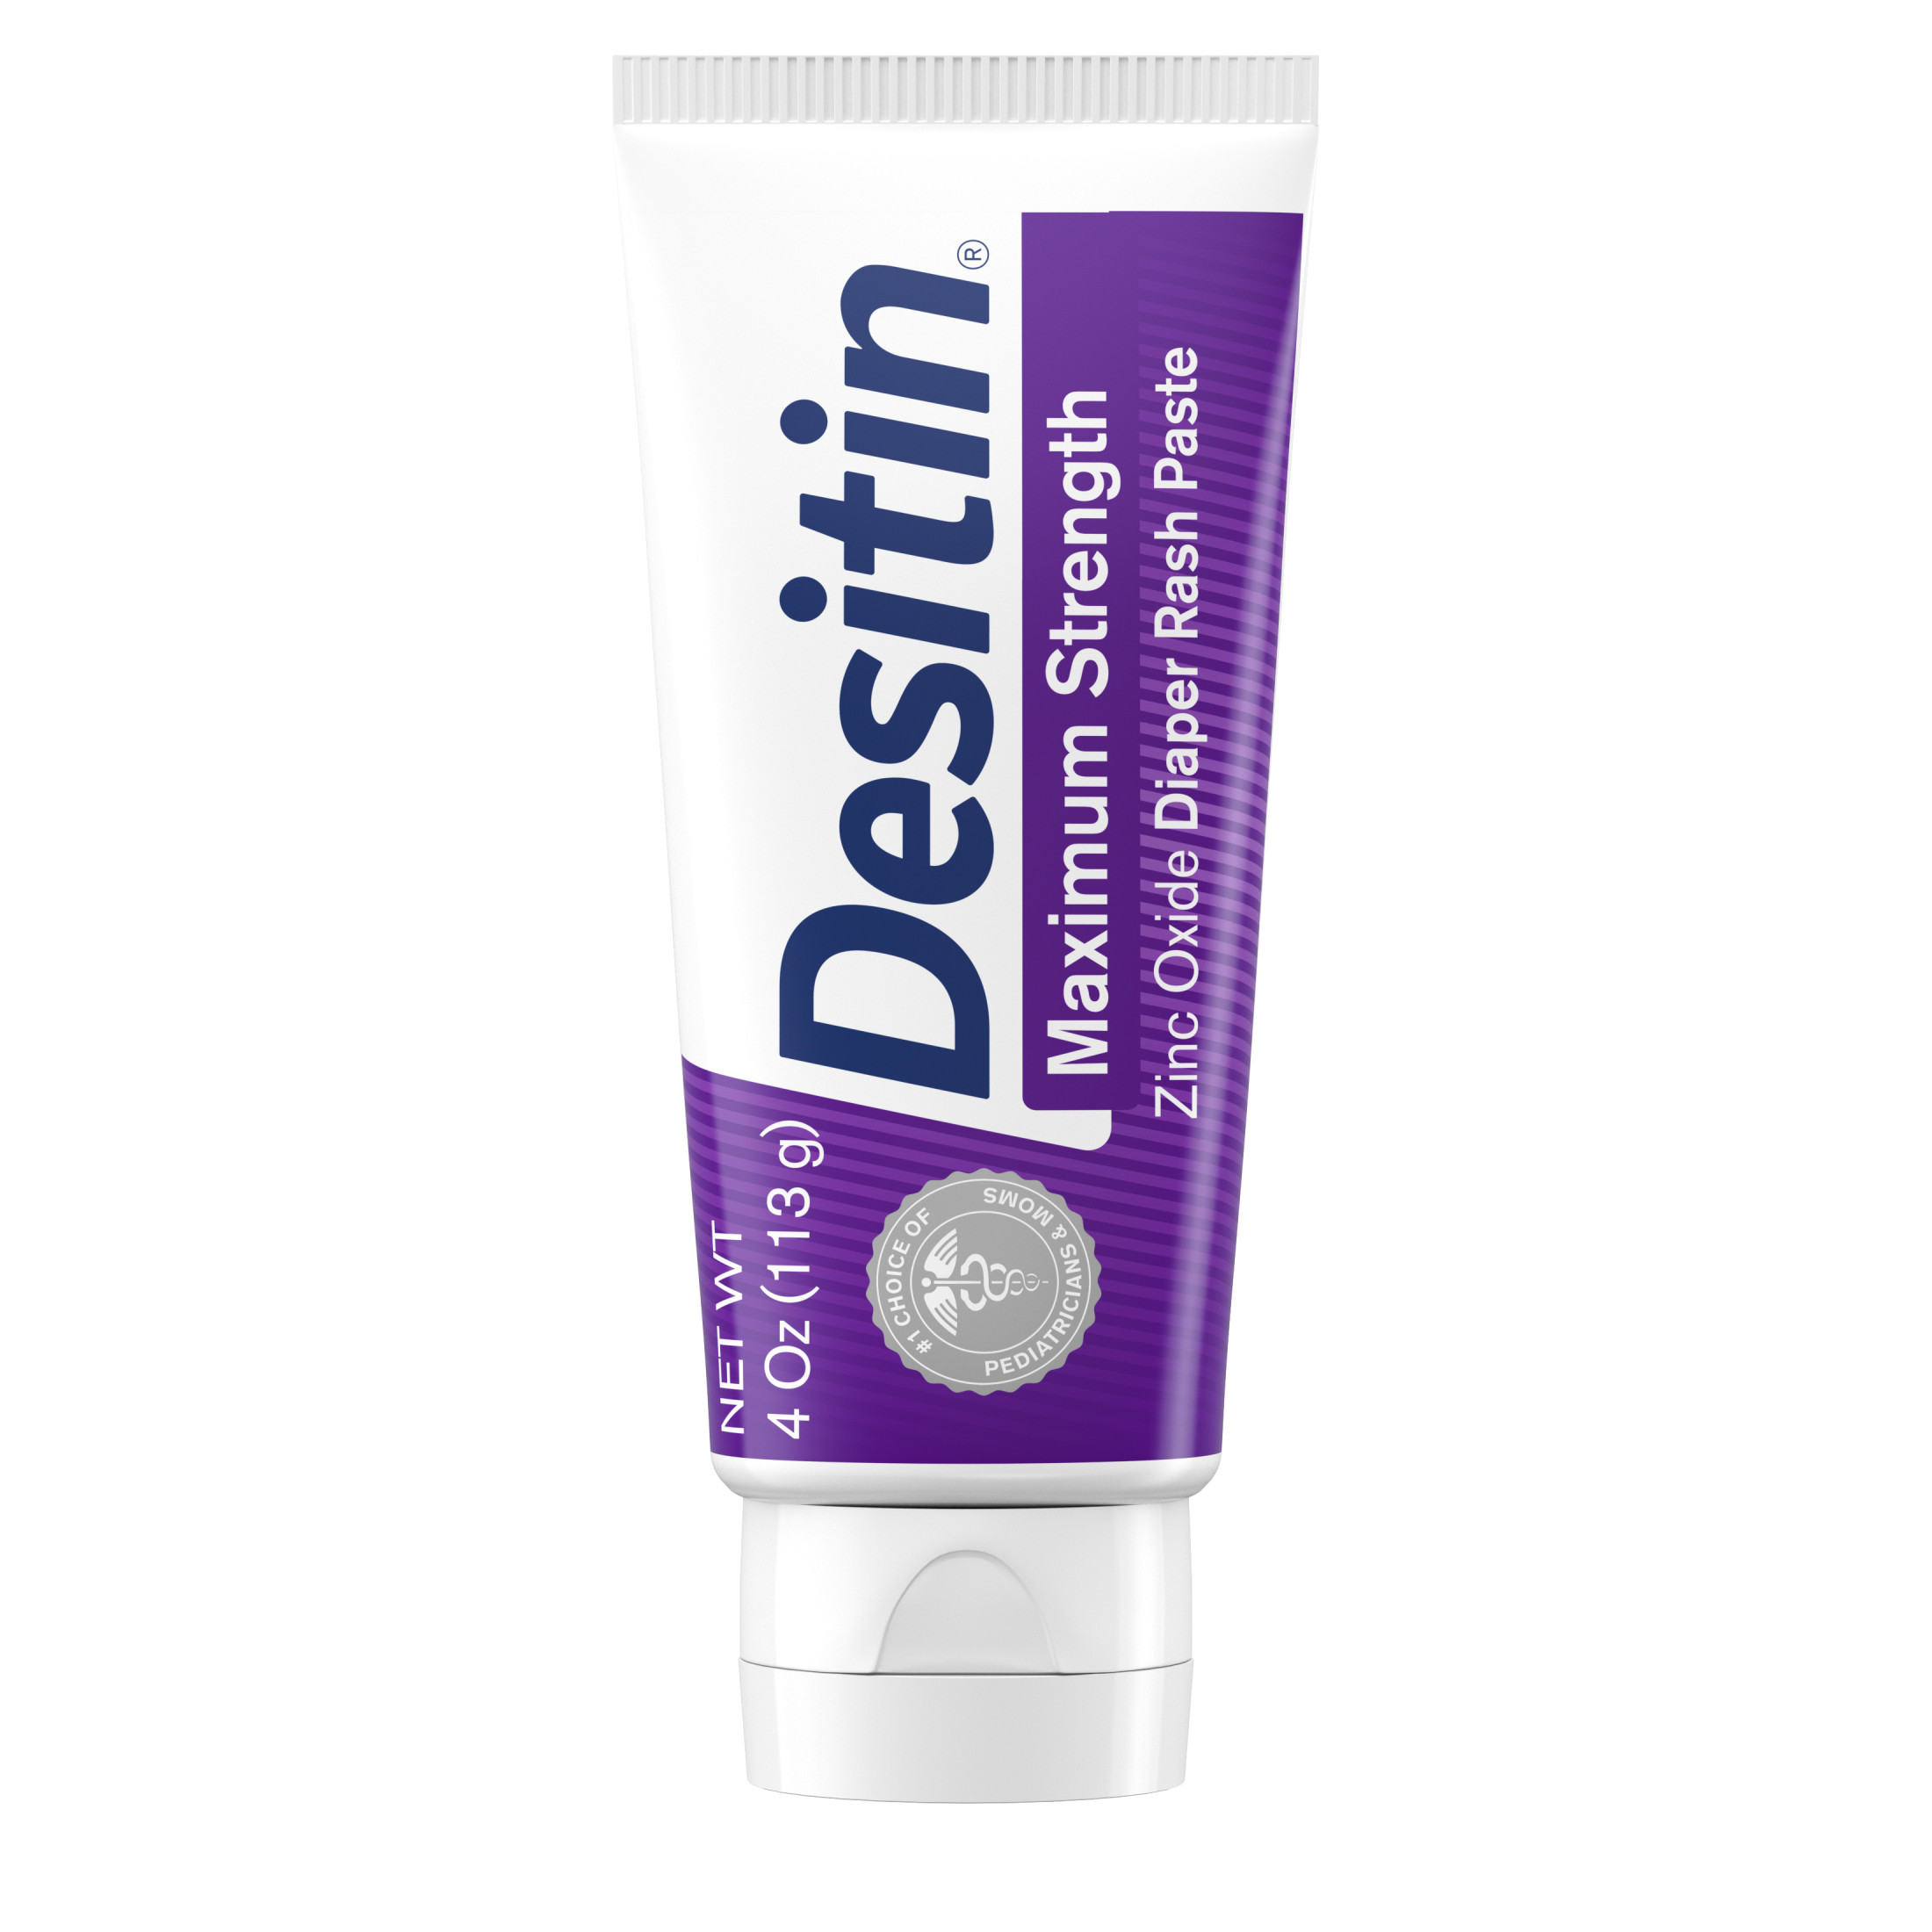 Desitin Maximum Strength Baby Diaper Rash Cream, Butt Paste with Zinc Oxide, 4 oz - image 3 of 11